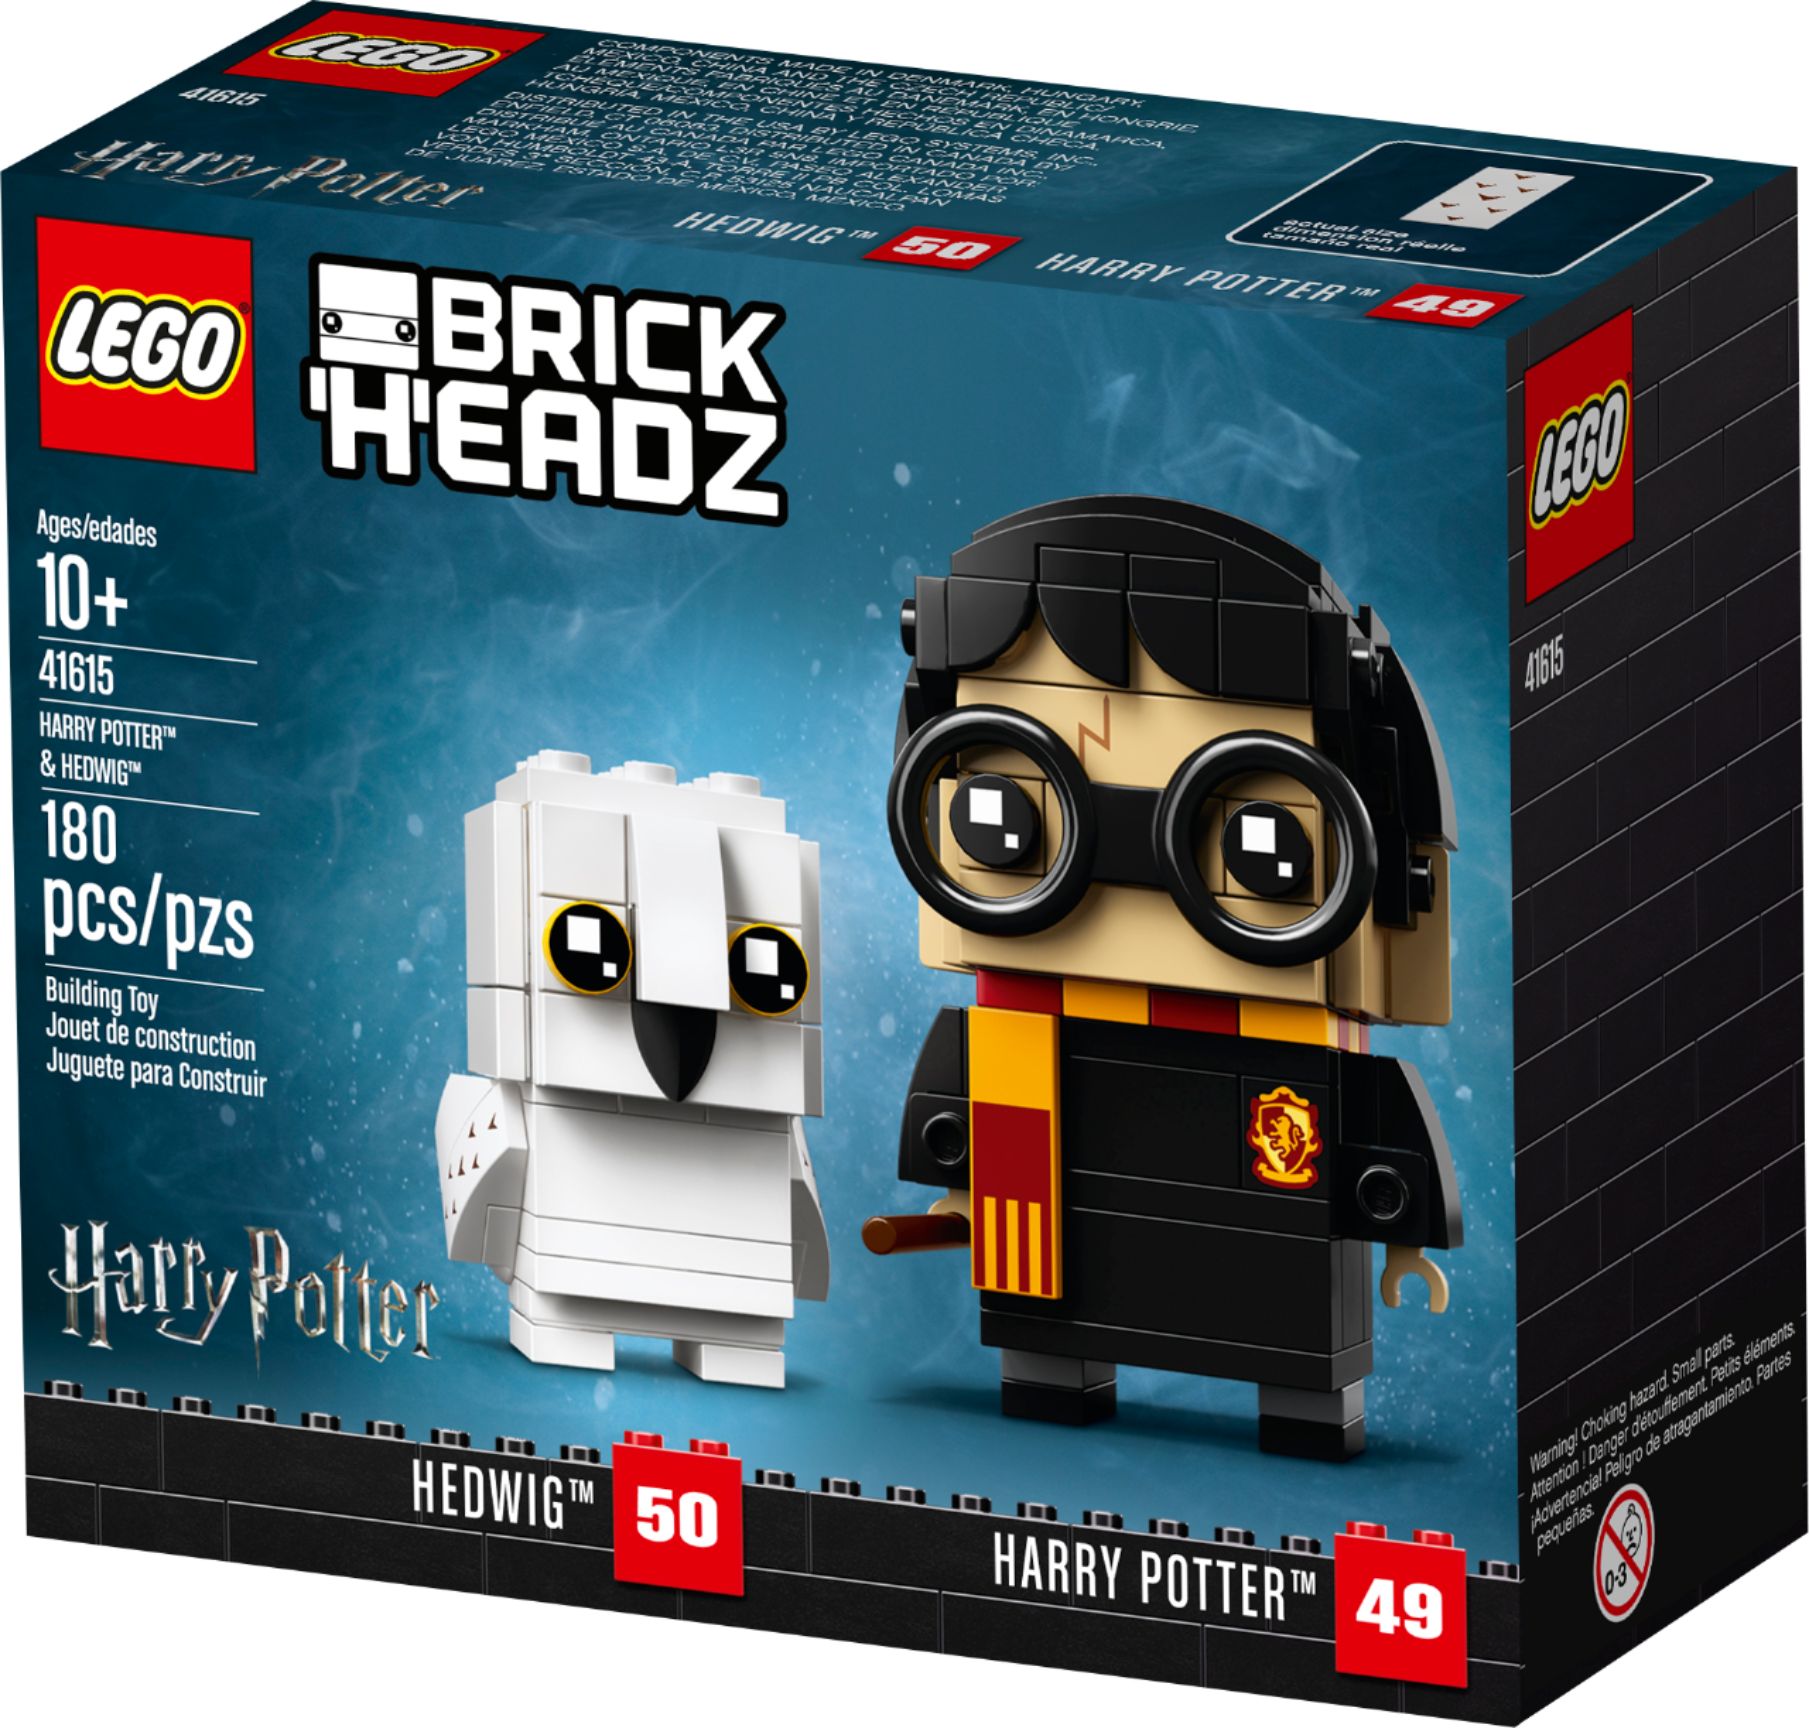 privilegeret Fysik basen Best Buy: LEGO BrickHeadz Harry Potter & Hedwig Building Setcolor 41615  Multicolor 6212733